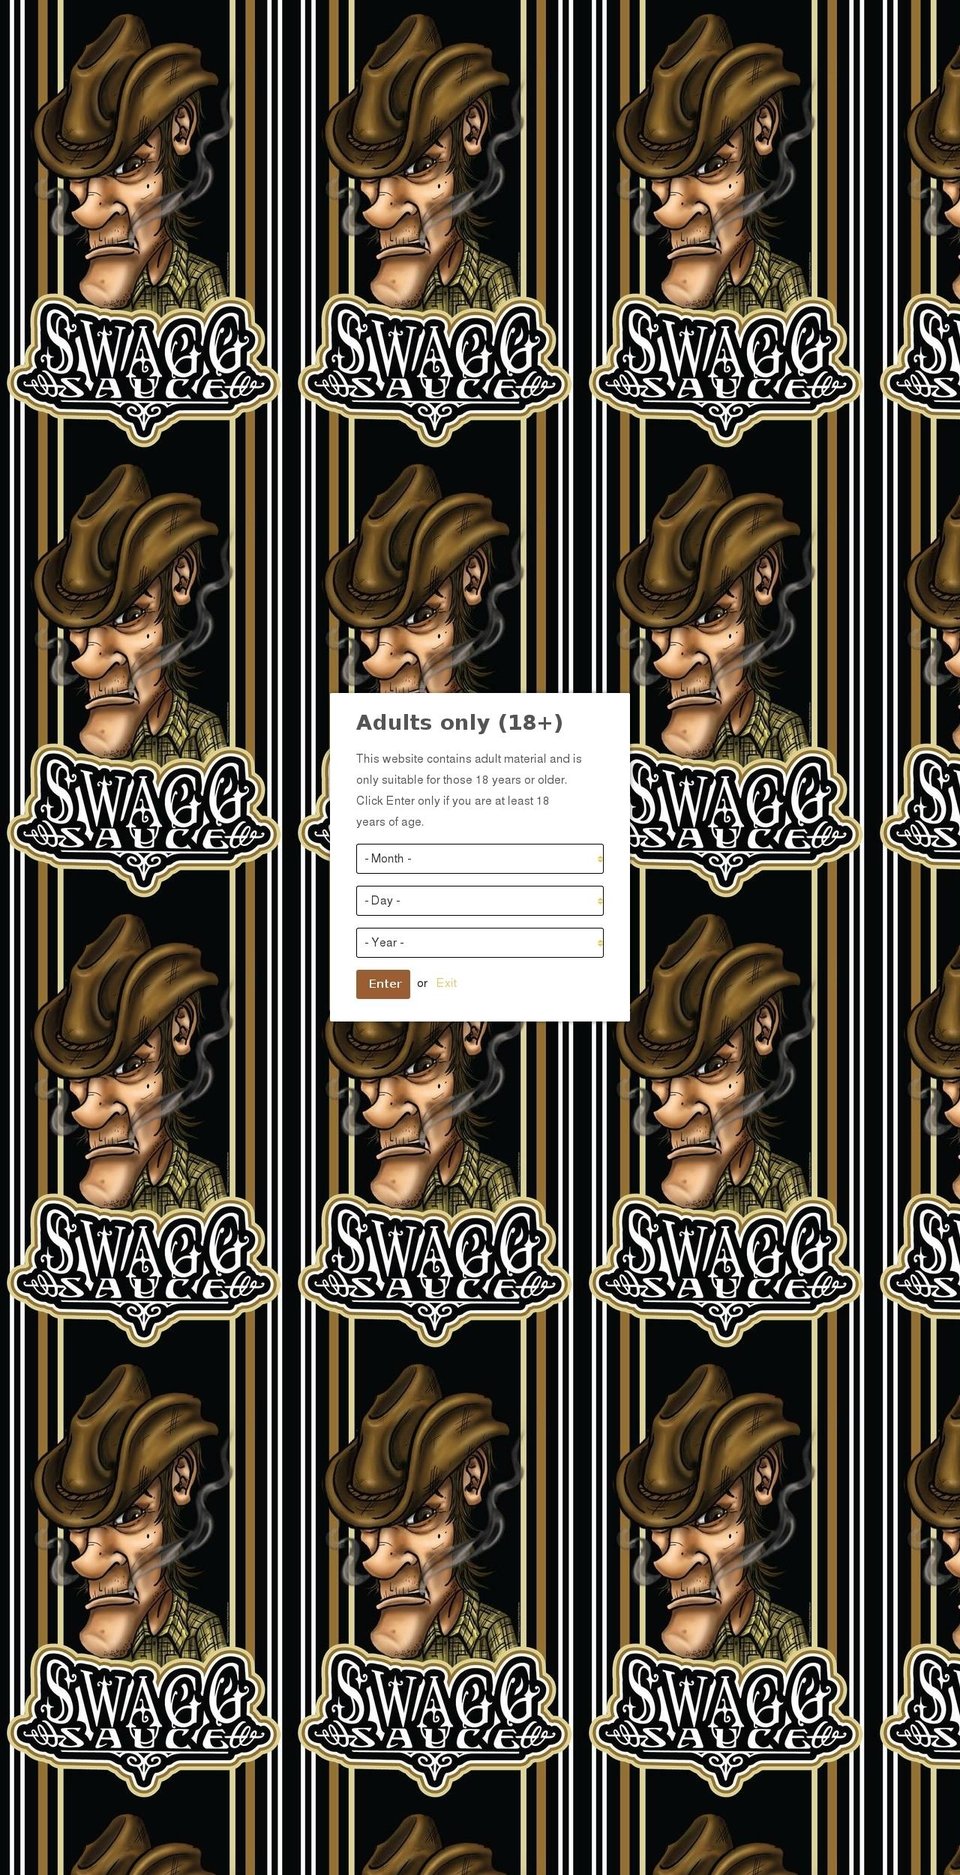 swaggsauce.com shopify website screenshot